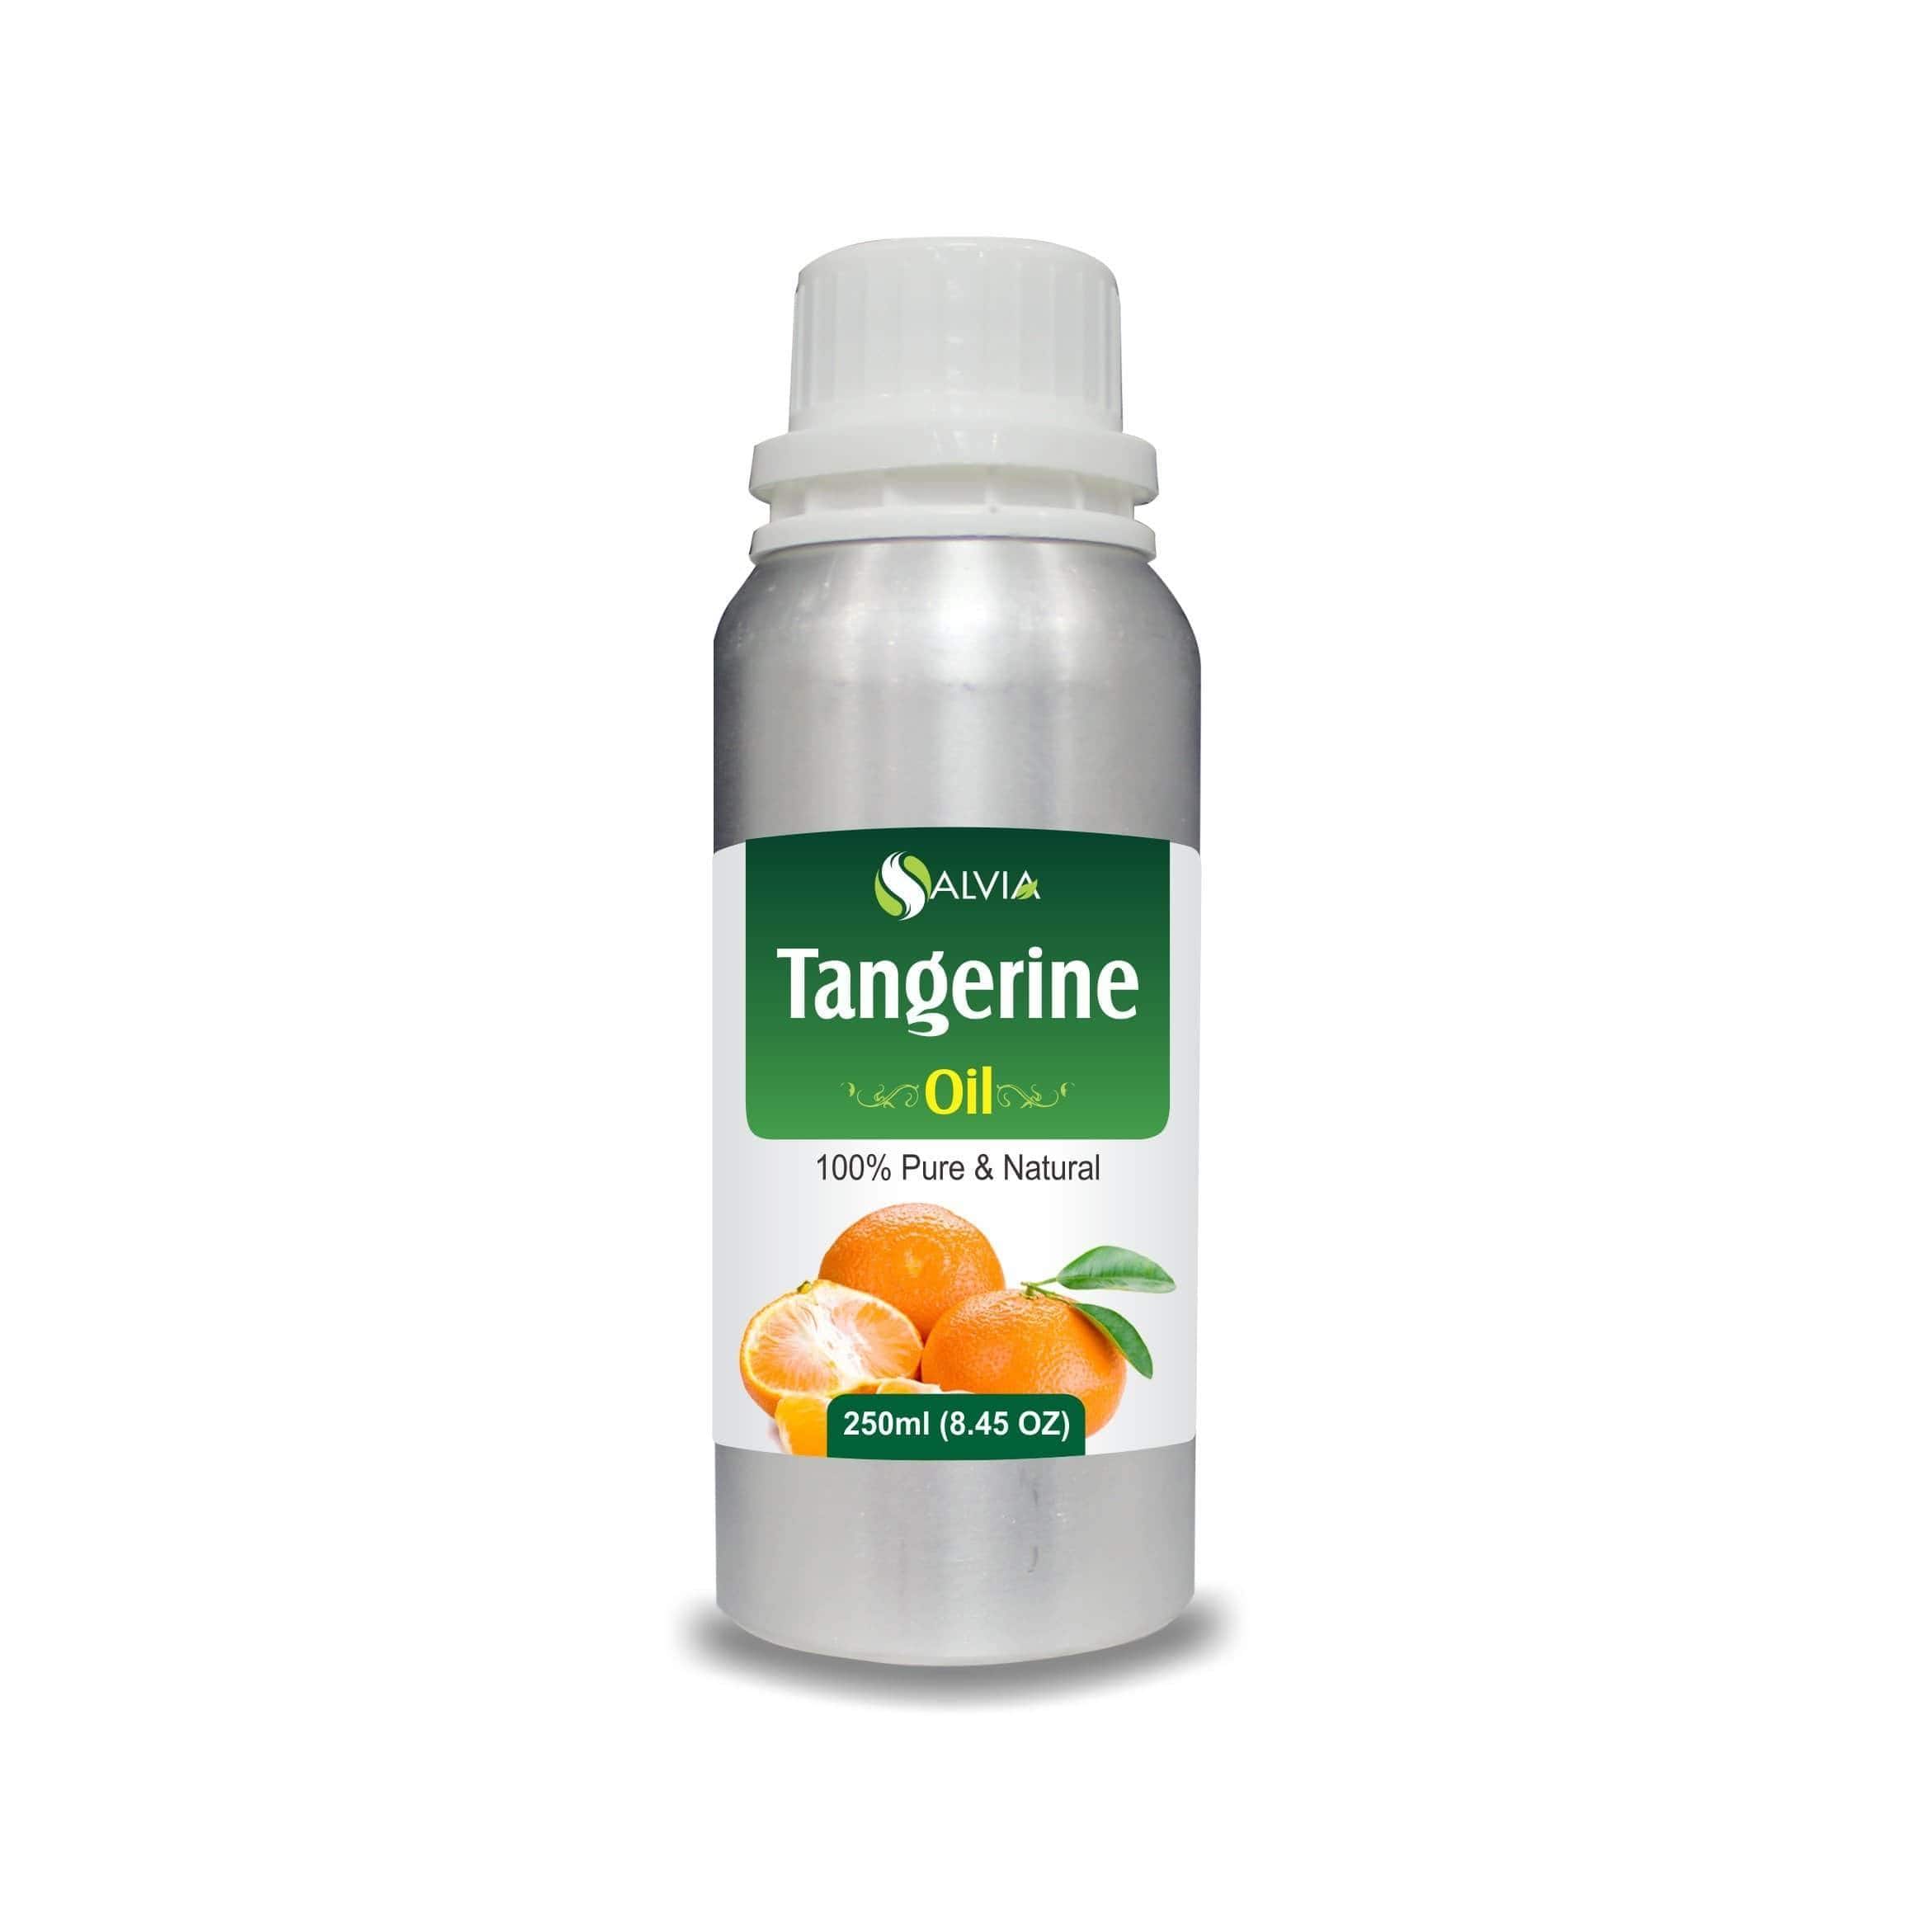 tangerine essential oil benefits